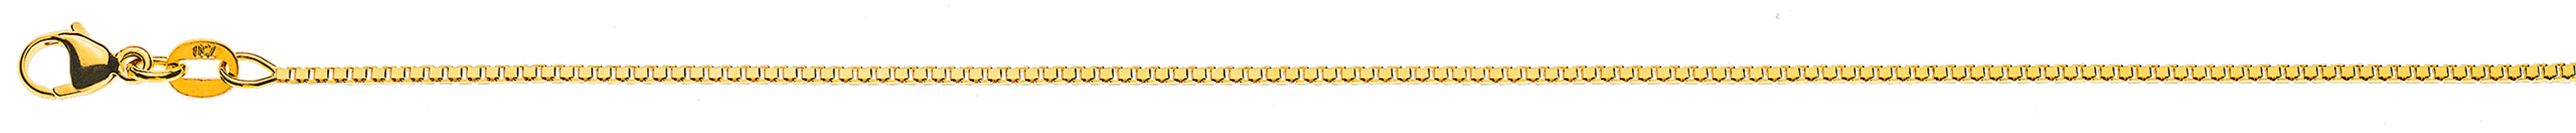 AURONOS Style Necklace yellow gold 9K Venetian chain diamond cut 45cm 1.1mm